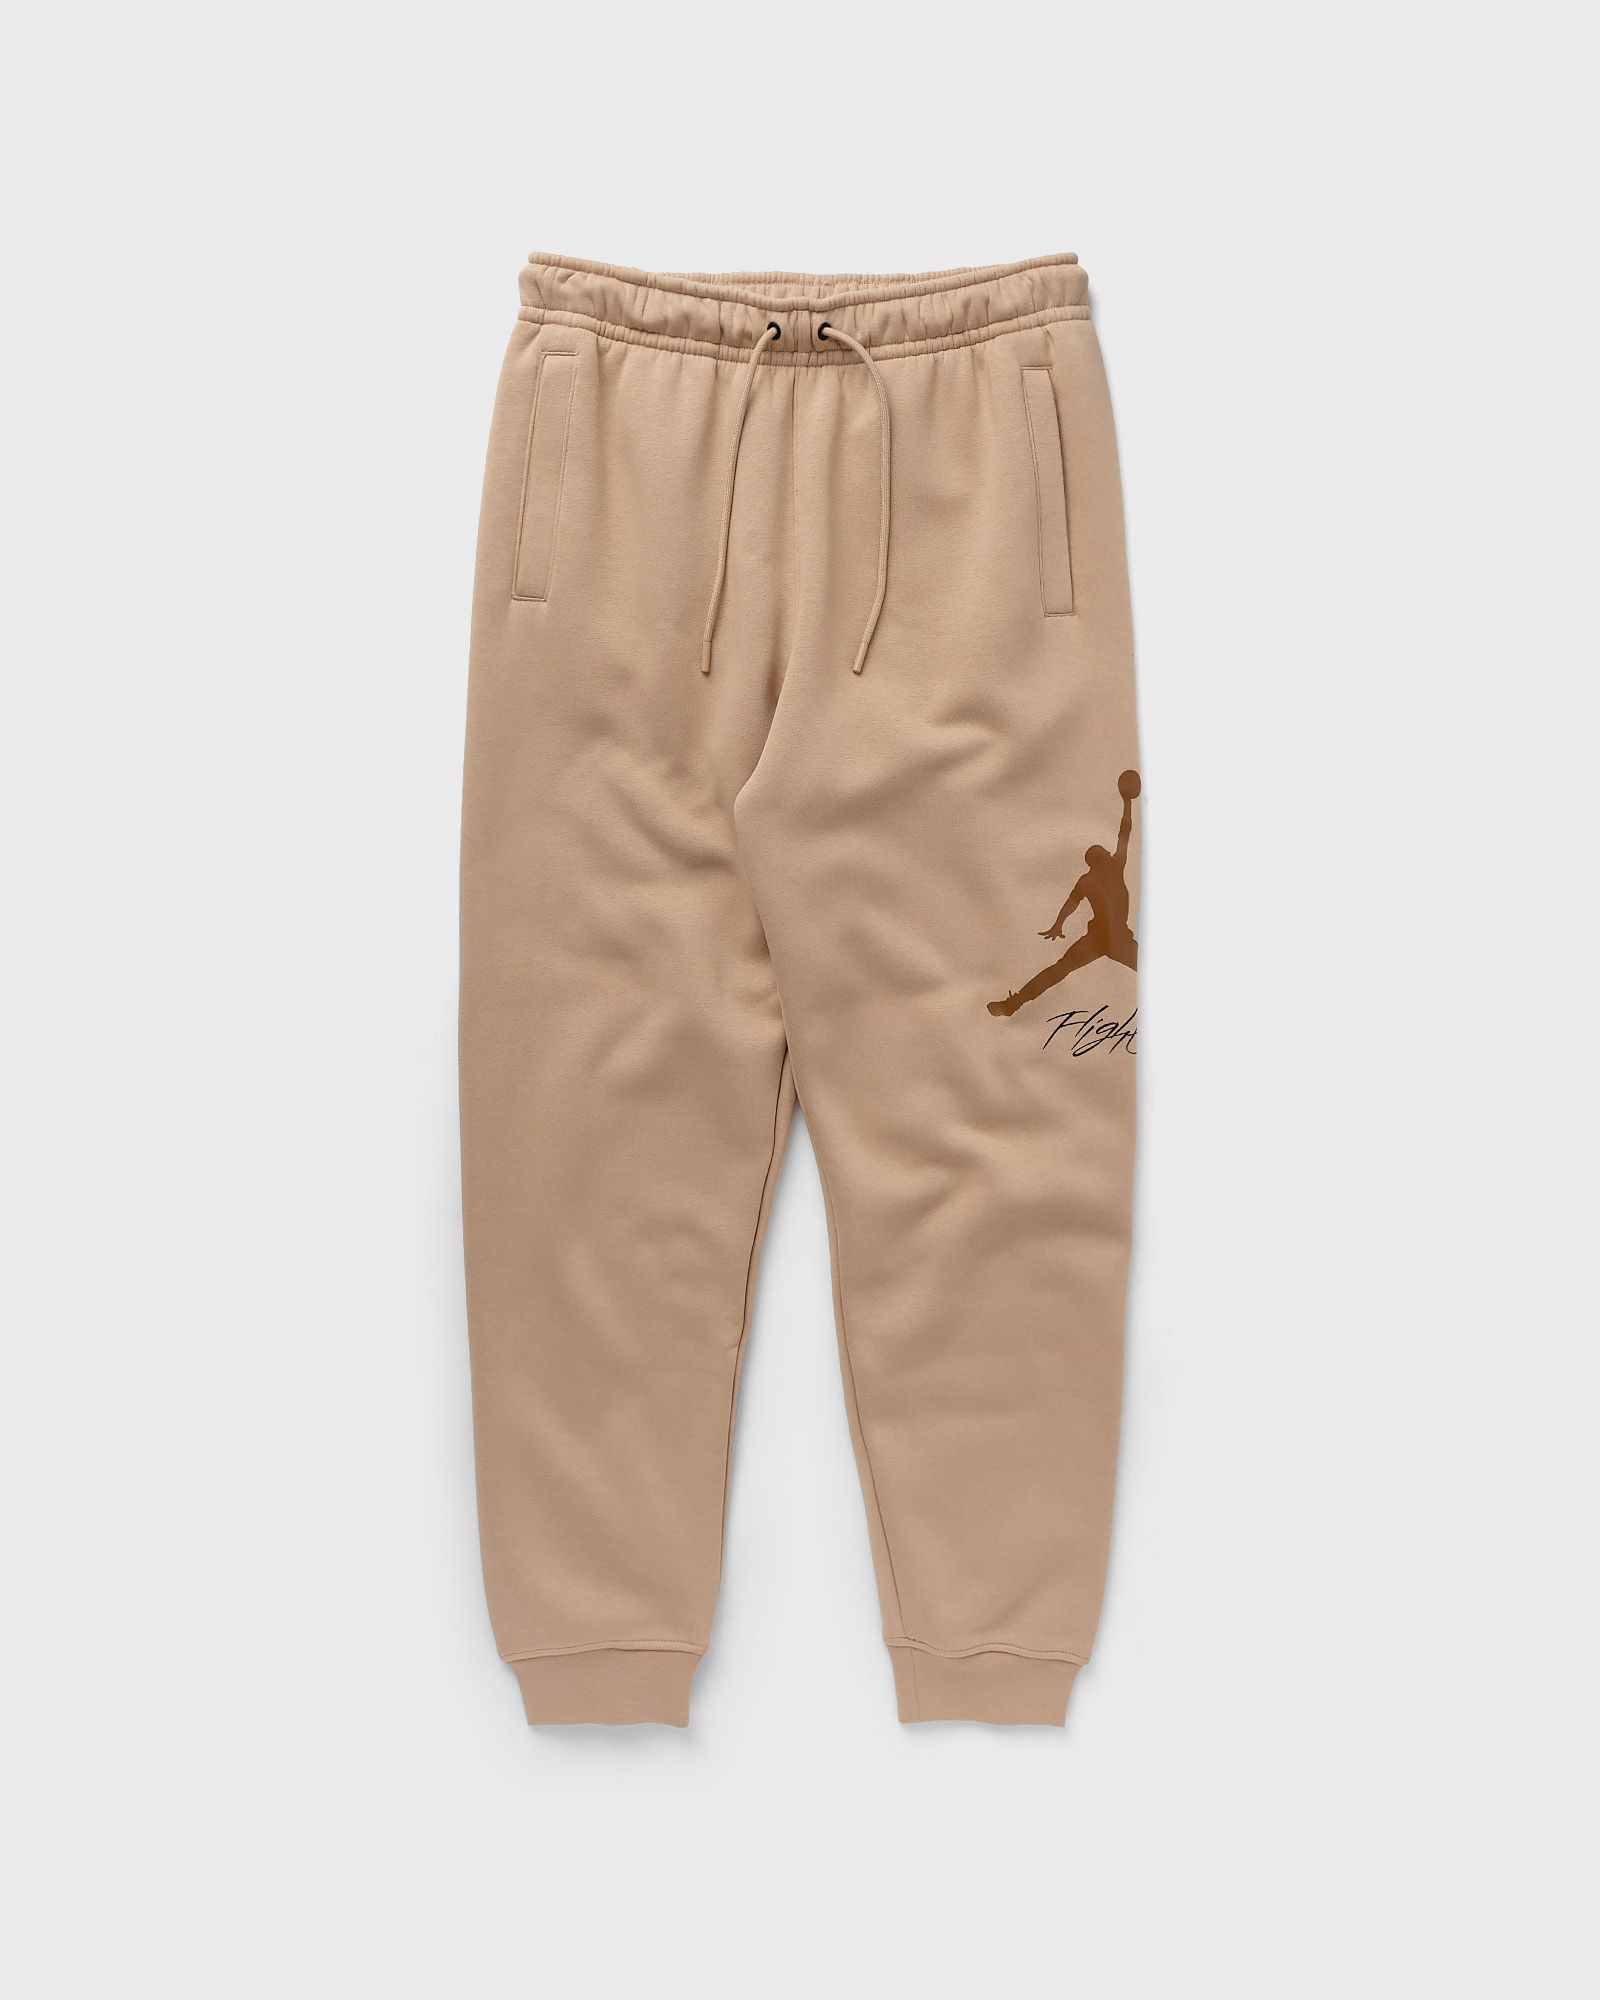 Jordan - essentials men's fleece baseline pants men sweatpants brown in größe:xl